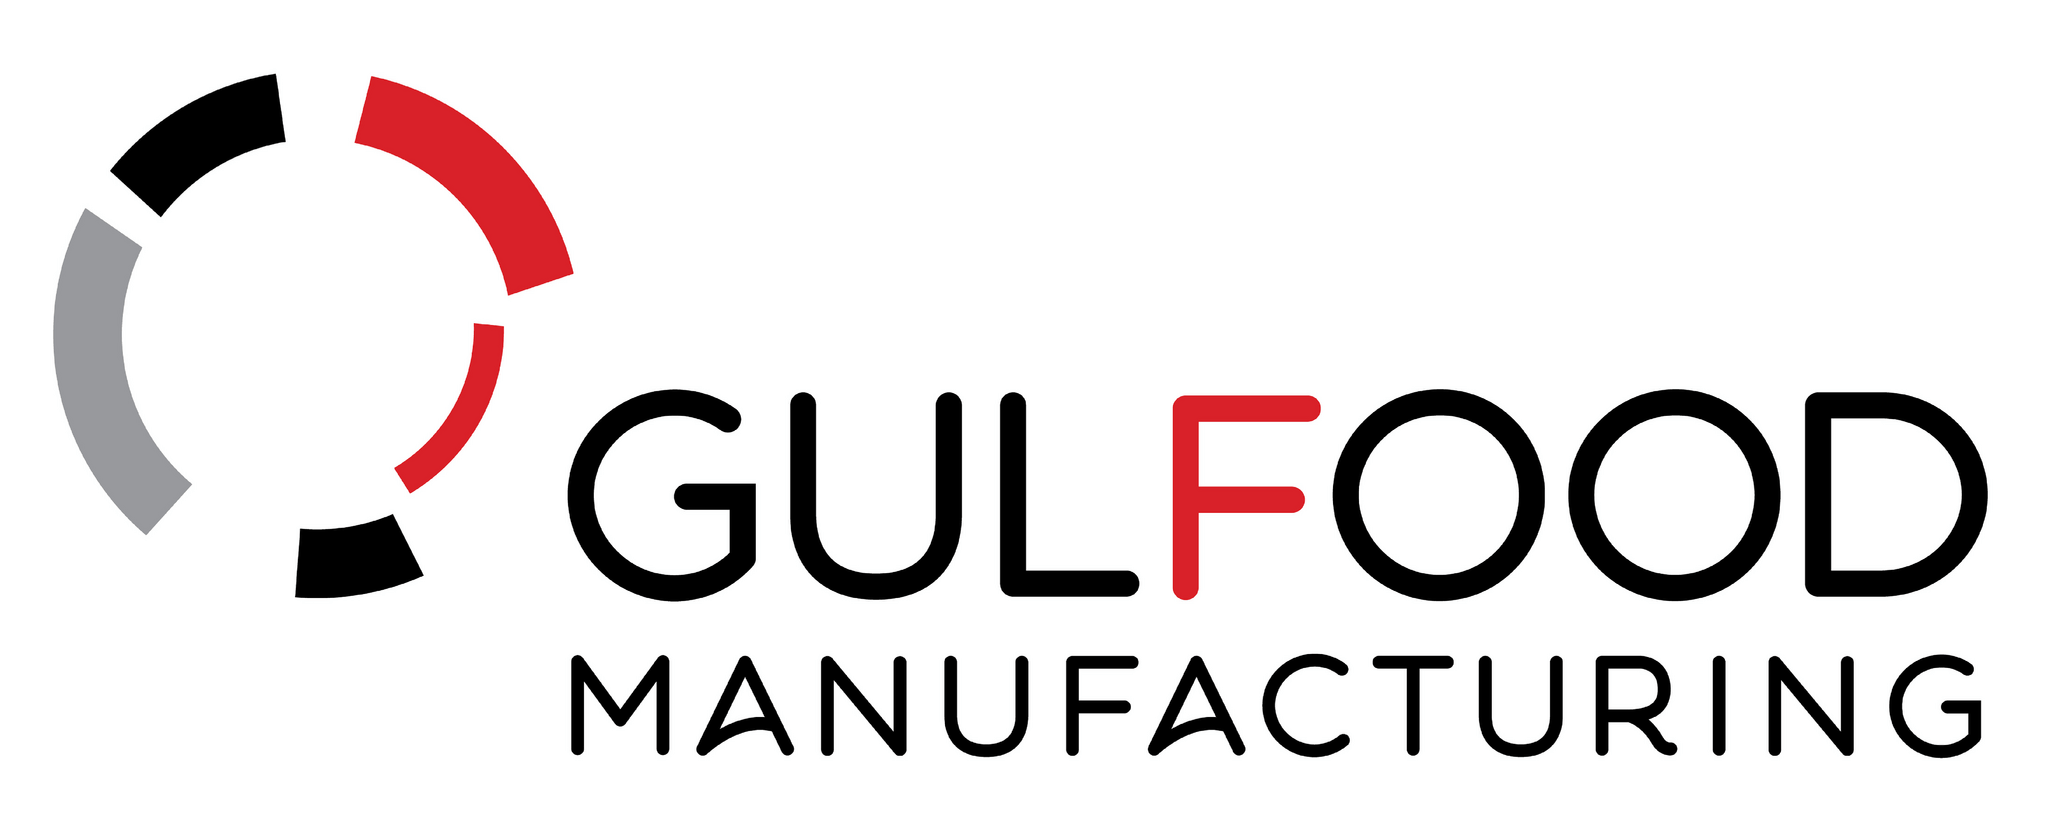 Manufacturing Logo - Gulfood Manufacturing 2018 in Dubai